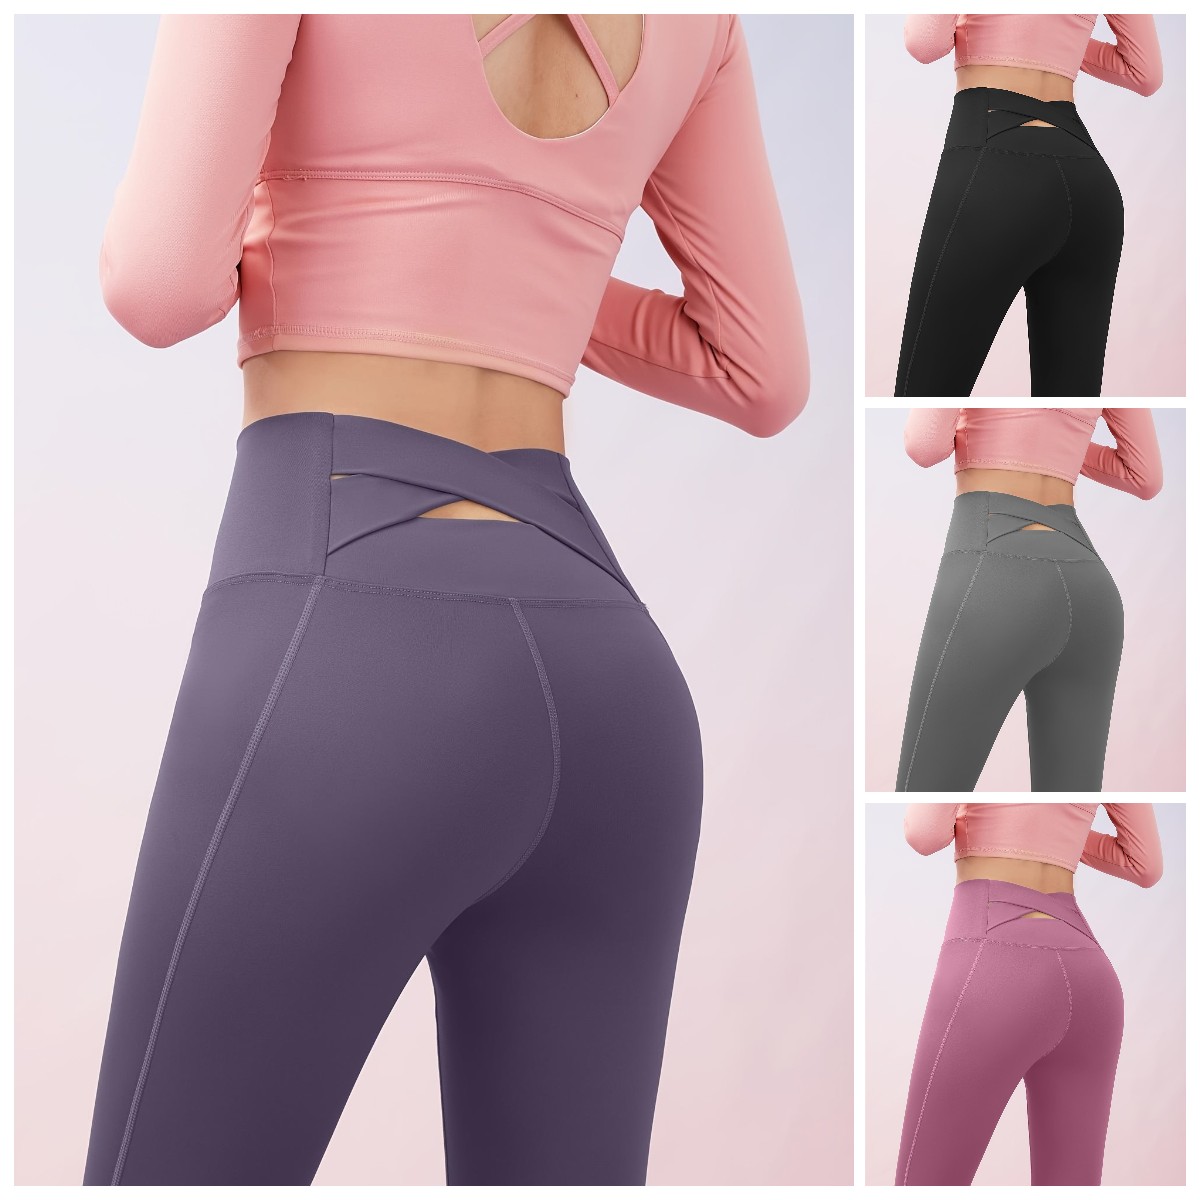 Women's High Waist Yoga Pants Side Pockets Bootcut Leggings Tummy Control 4  Way Stretch Quick Dry Dark Grey Wine Fitness Gym Workout Dance Summer Spor